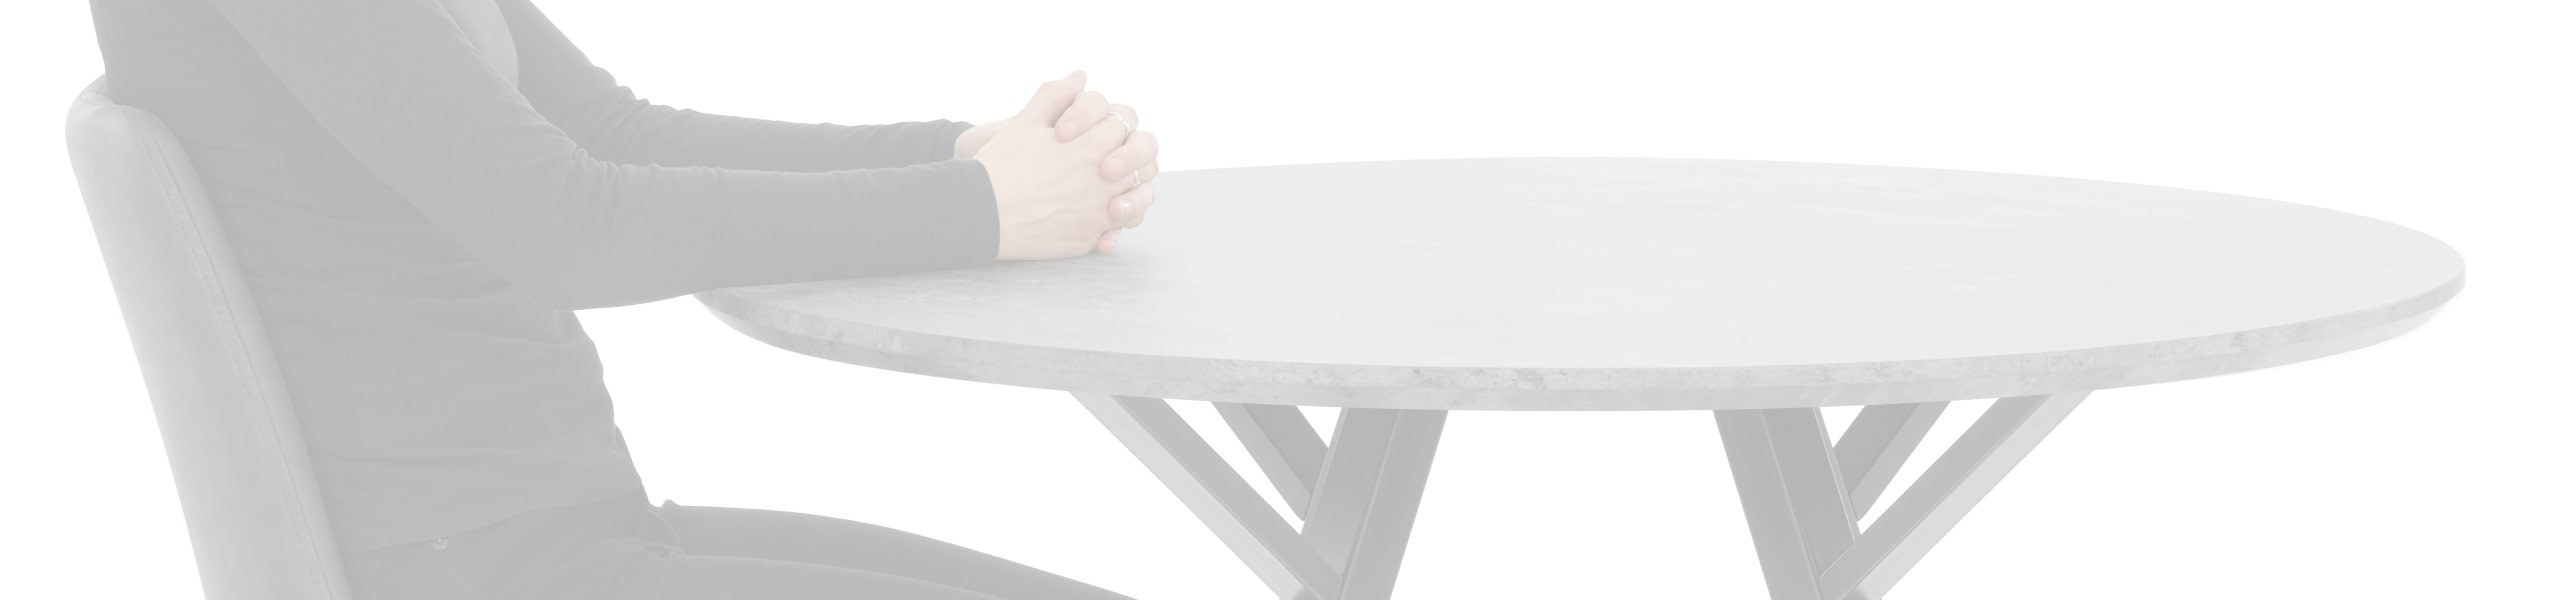 Quest 100cm Dining Table Concrete Review Banner